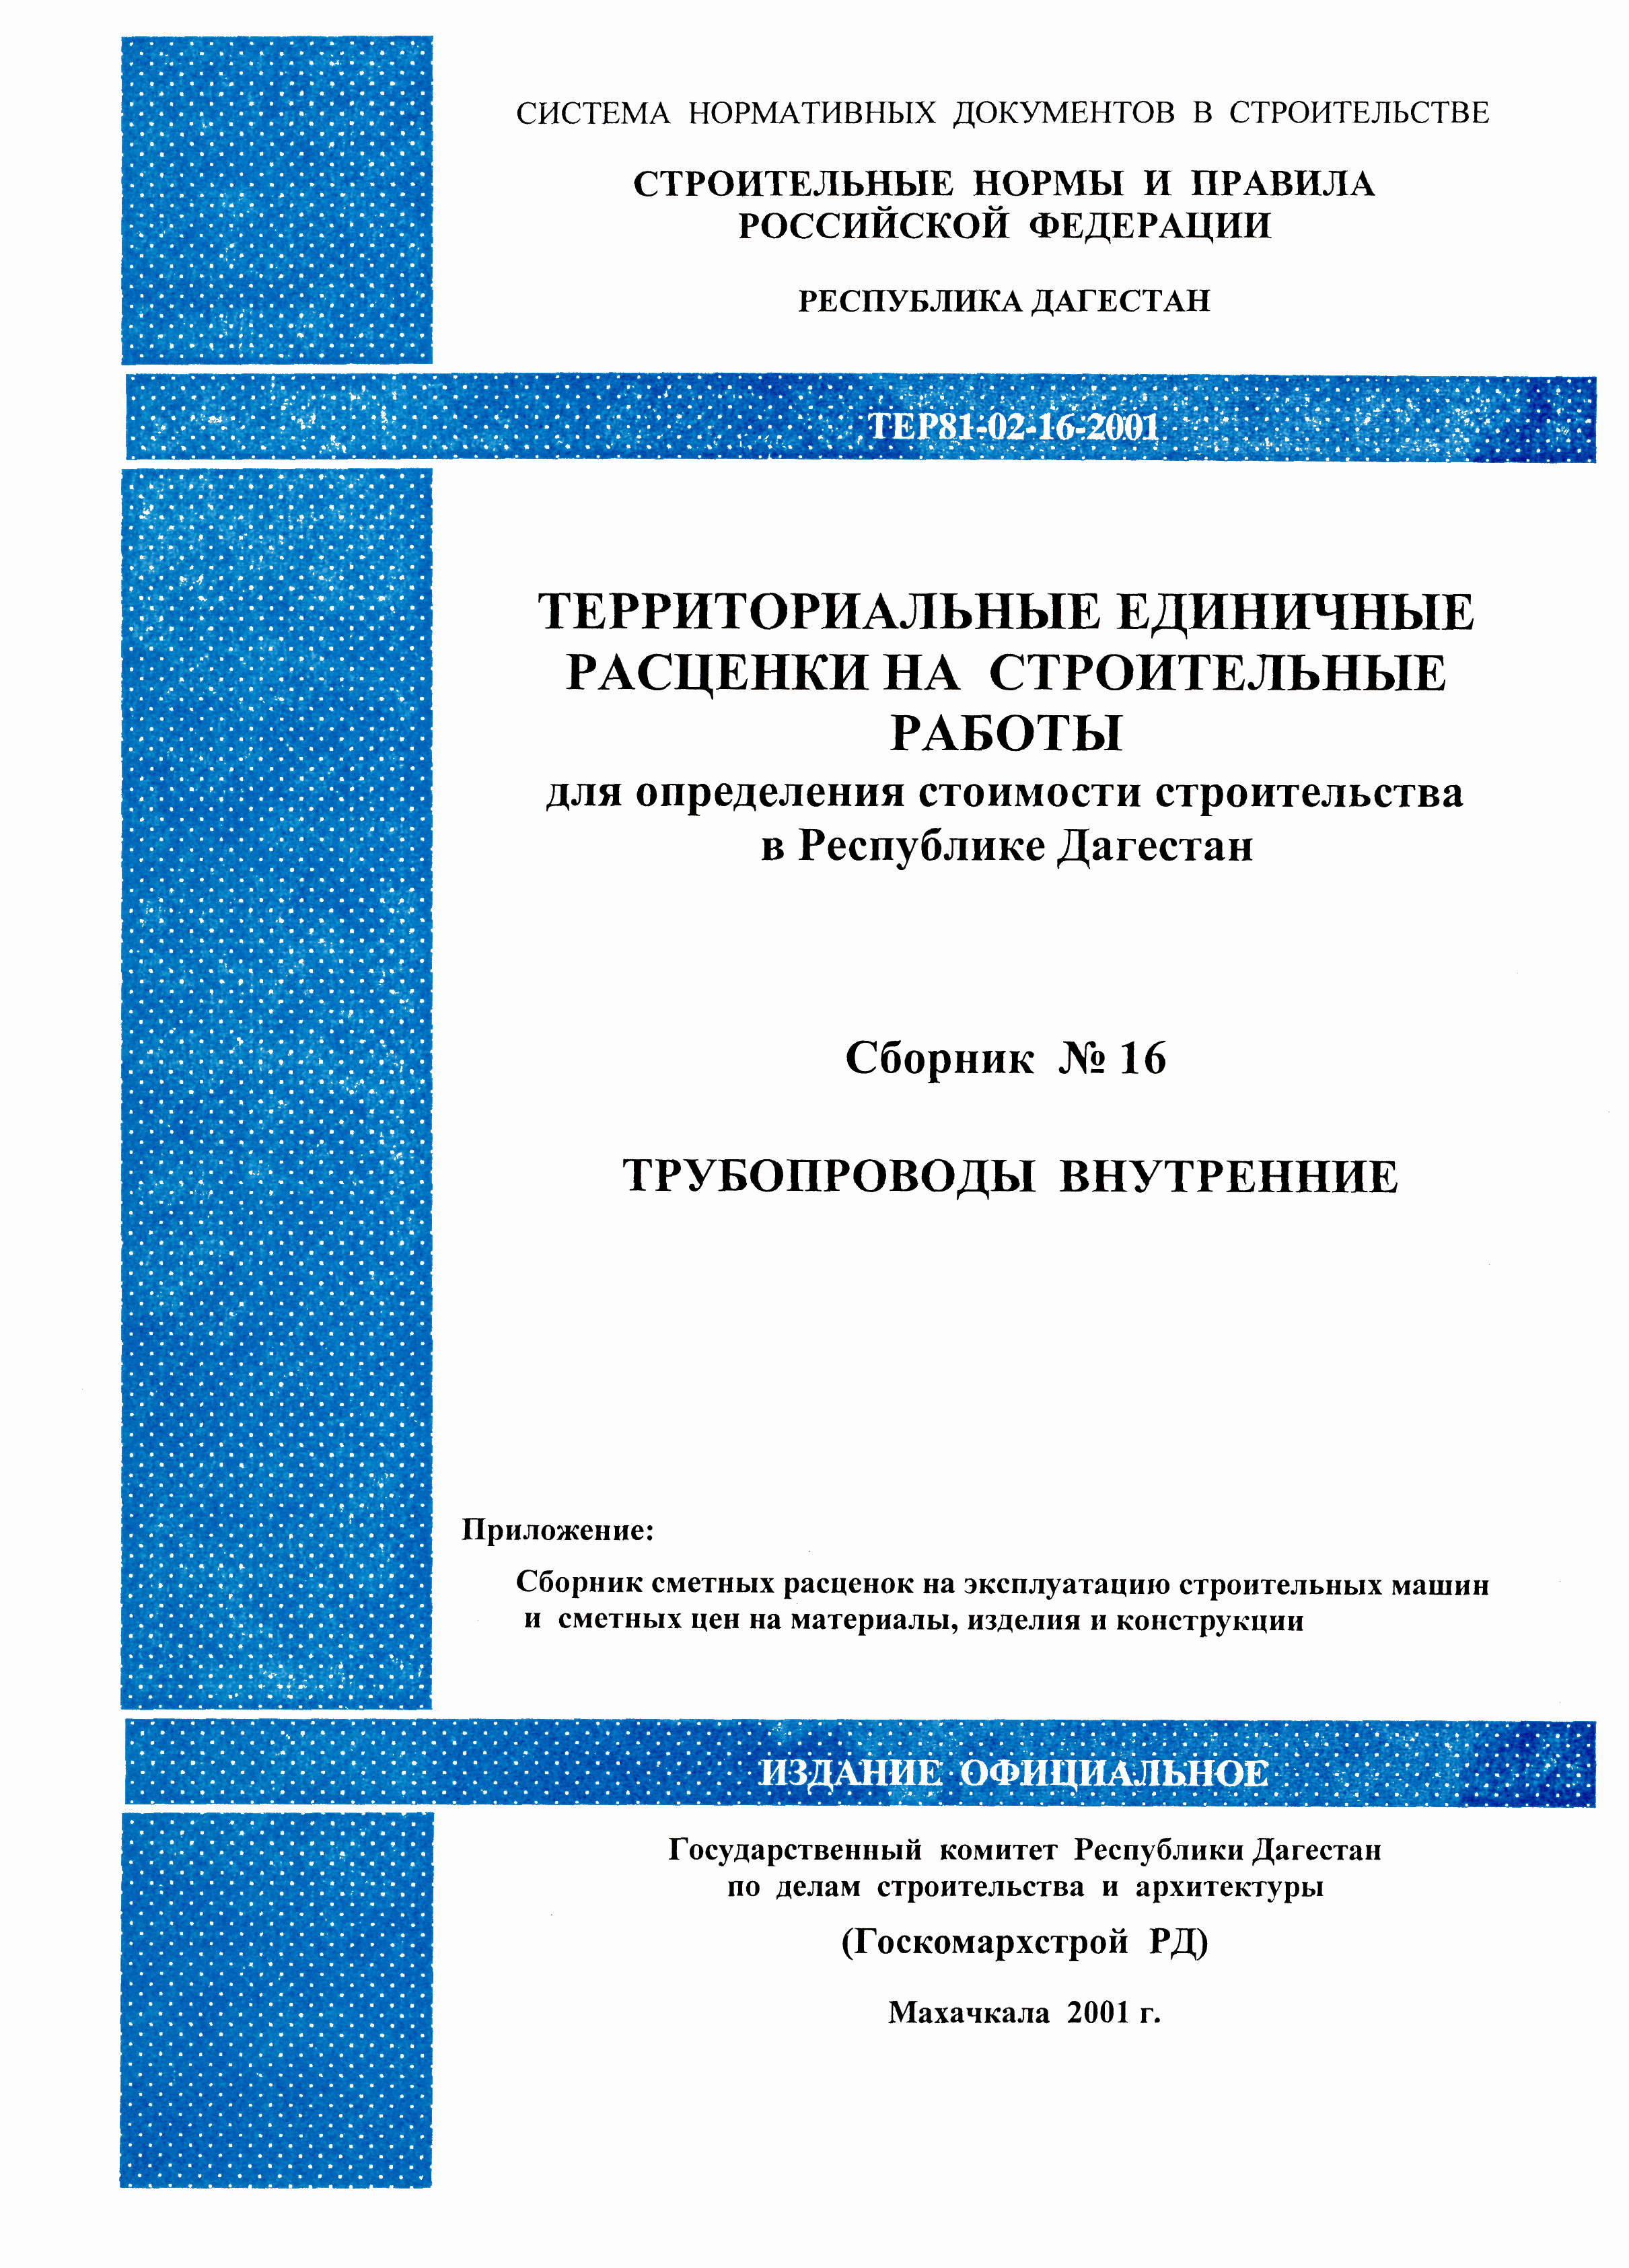 ТЕР Республика Дагестан 2001-16